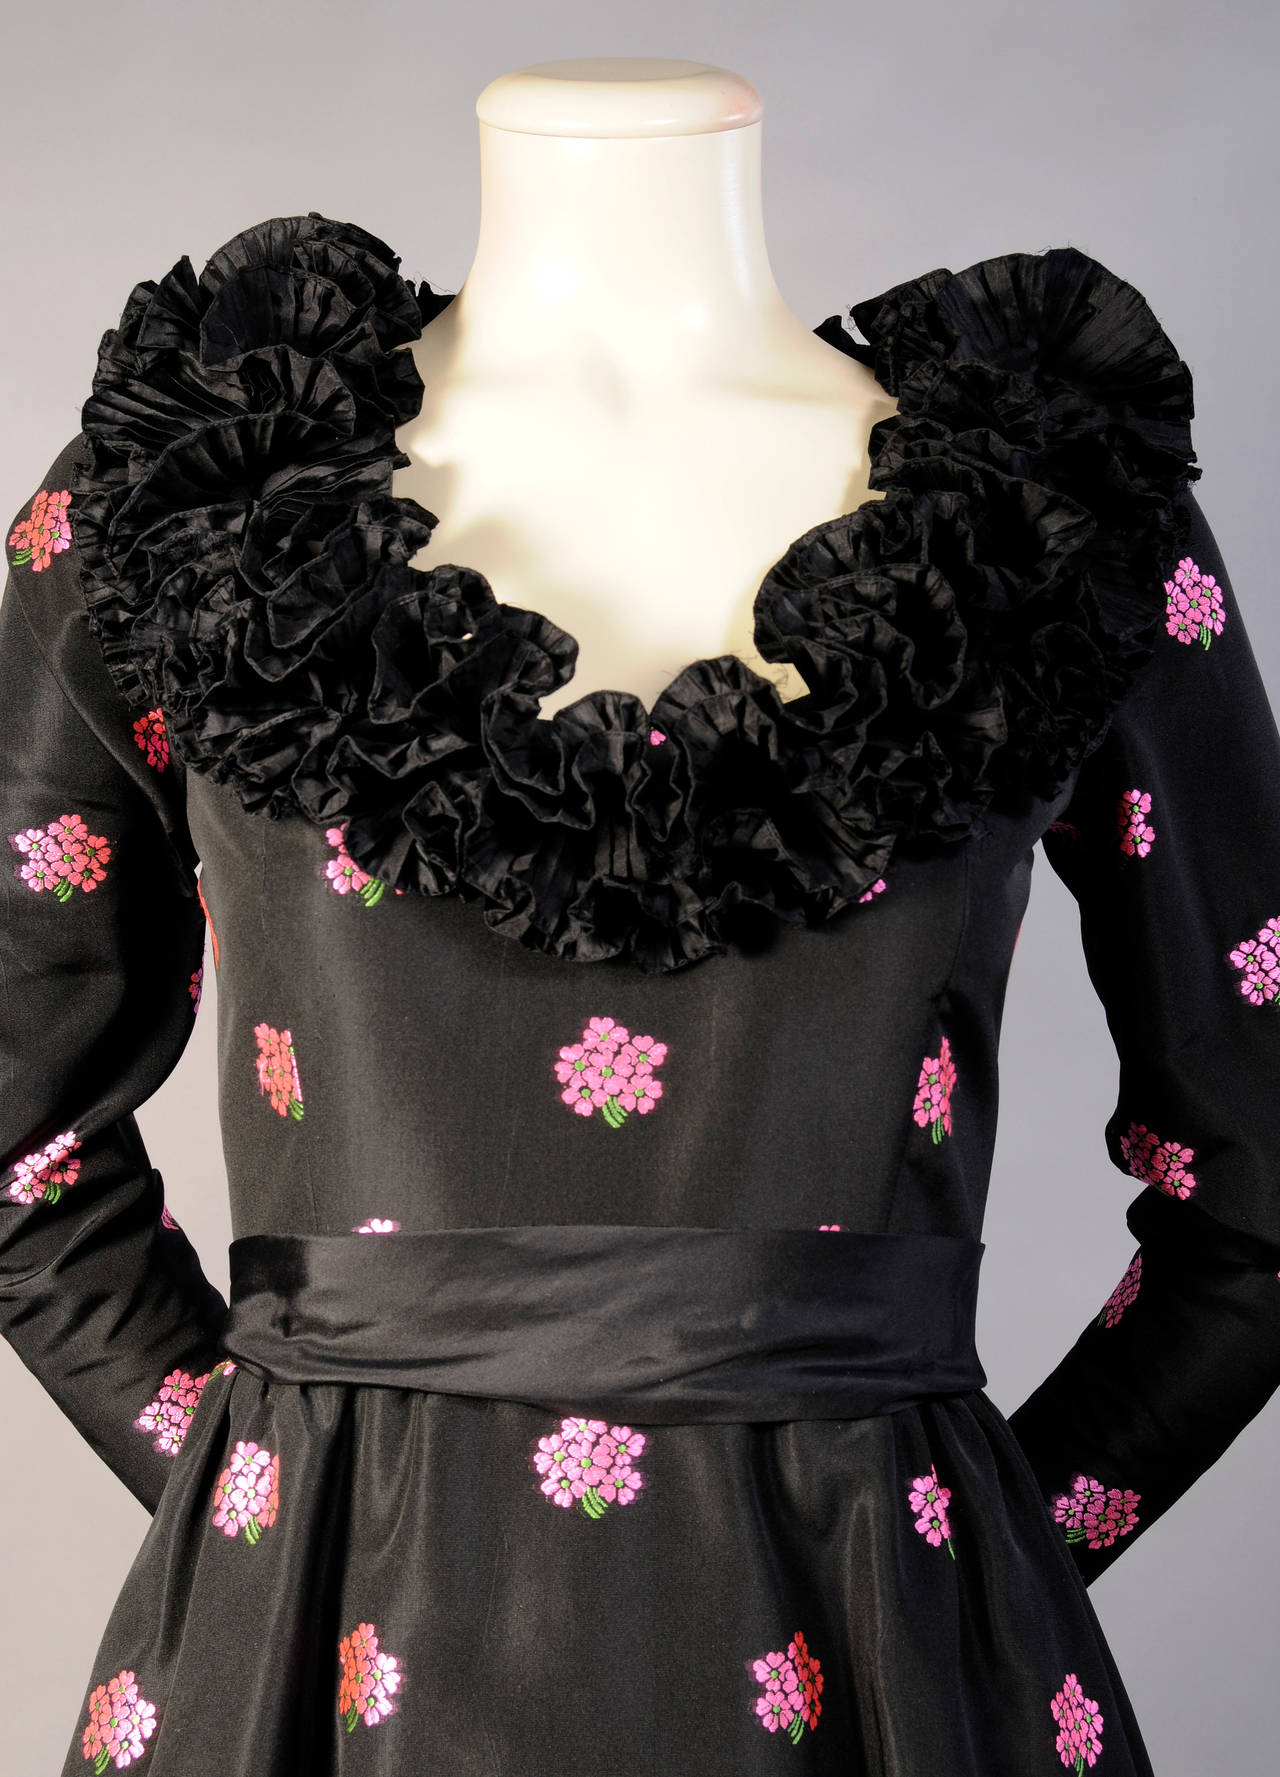 Women's 1972 Yves Saint Laurent Numbered Haute Couture Gown, Museum de-accession